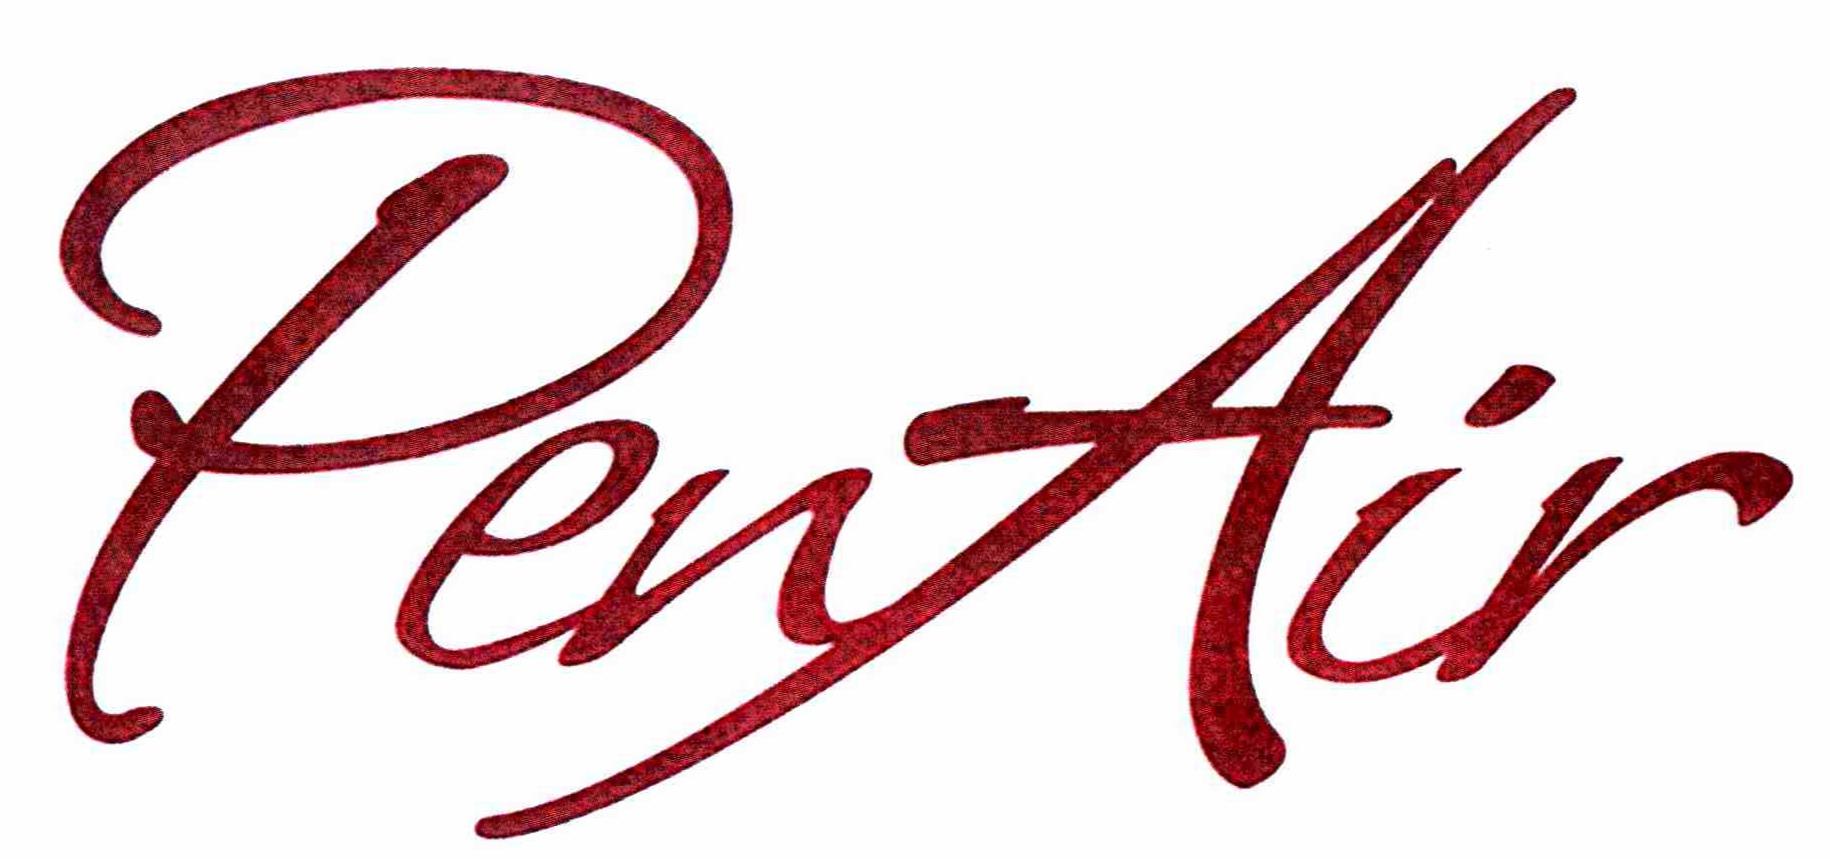 Trademark Logo PENAIR